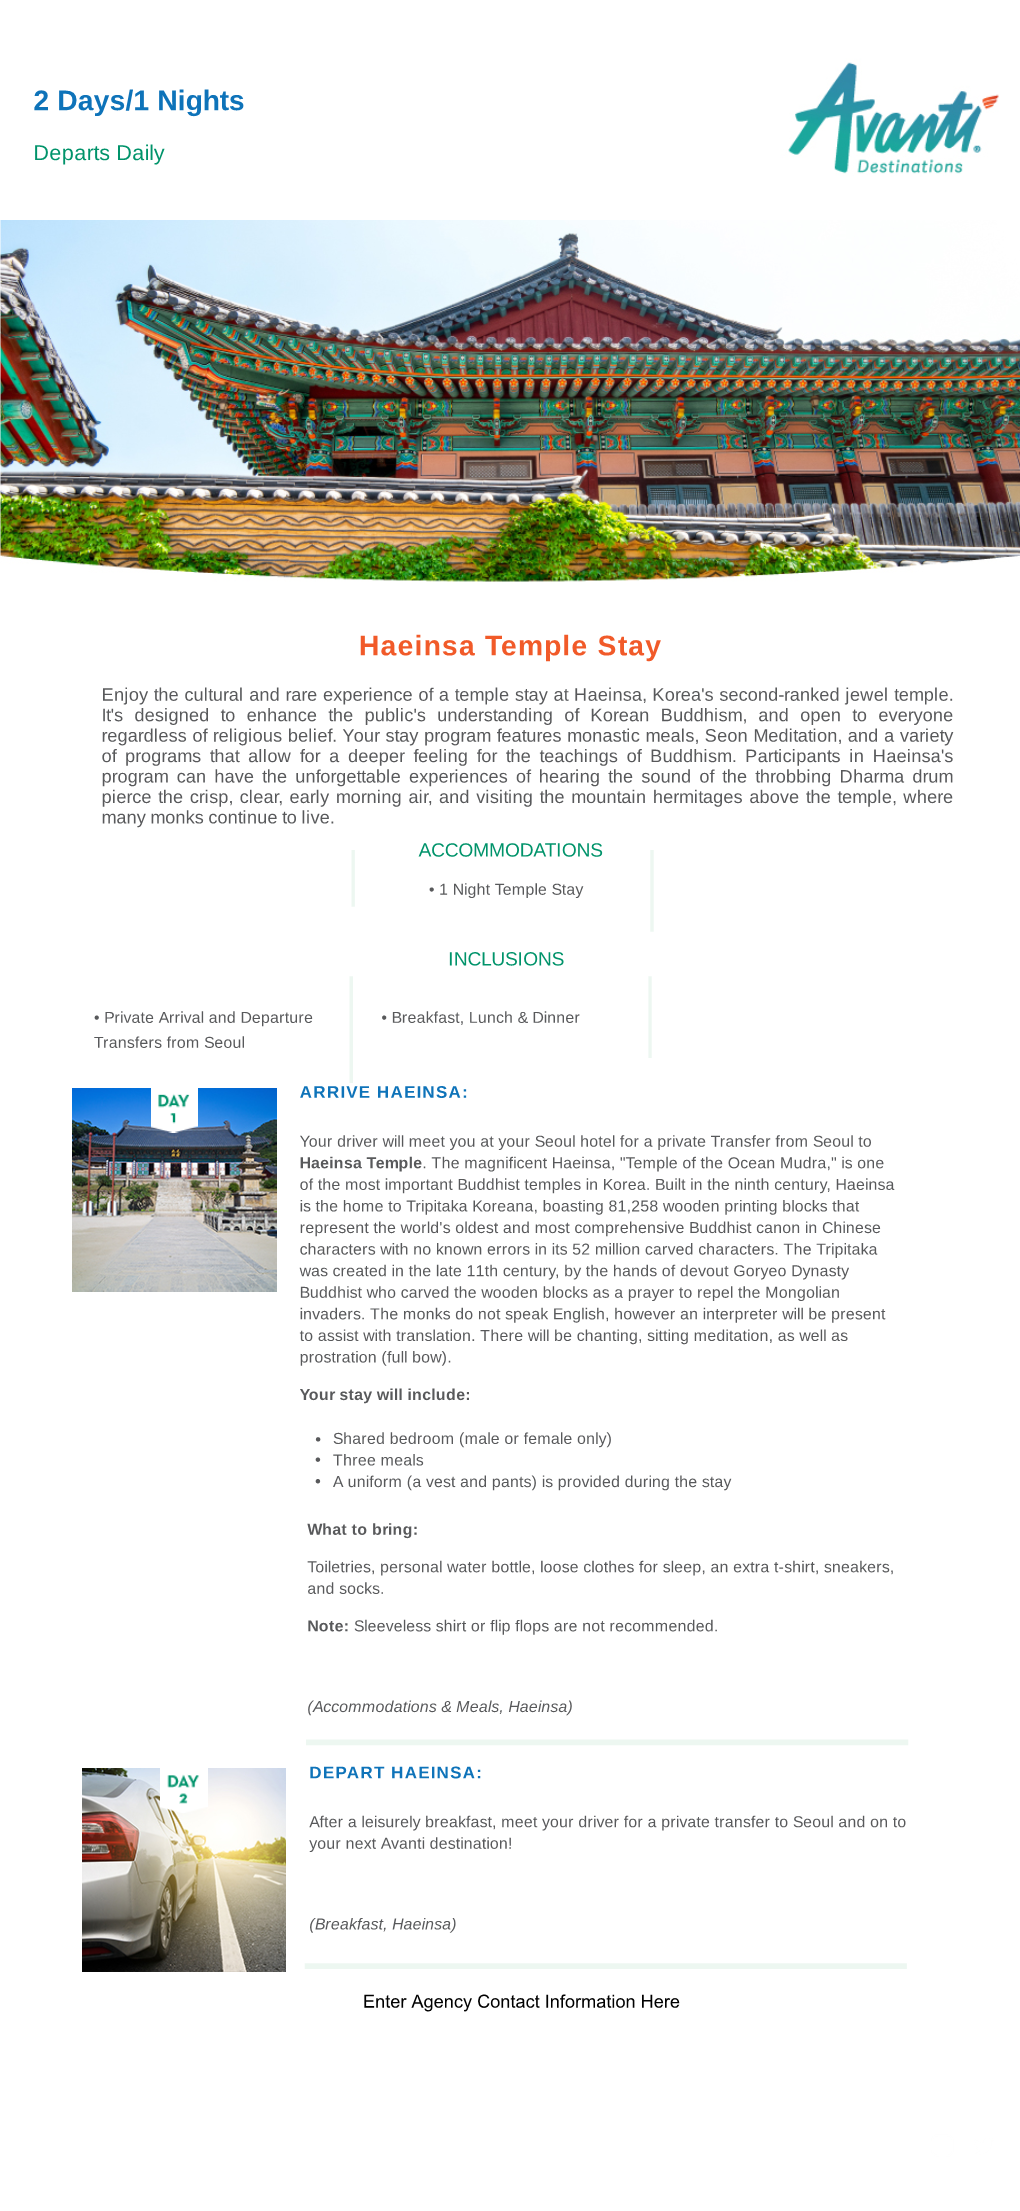 2 Days/1 Nights Haeinsa Temple Stay